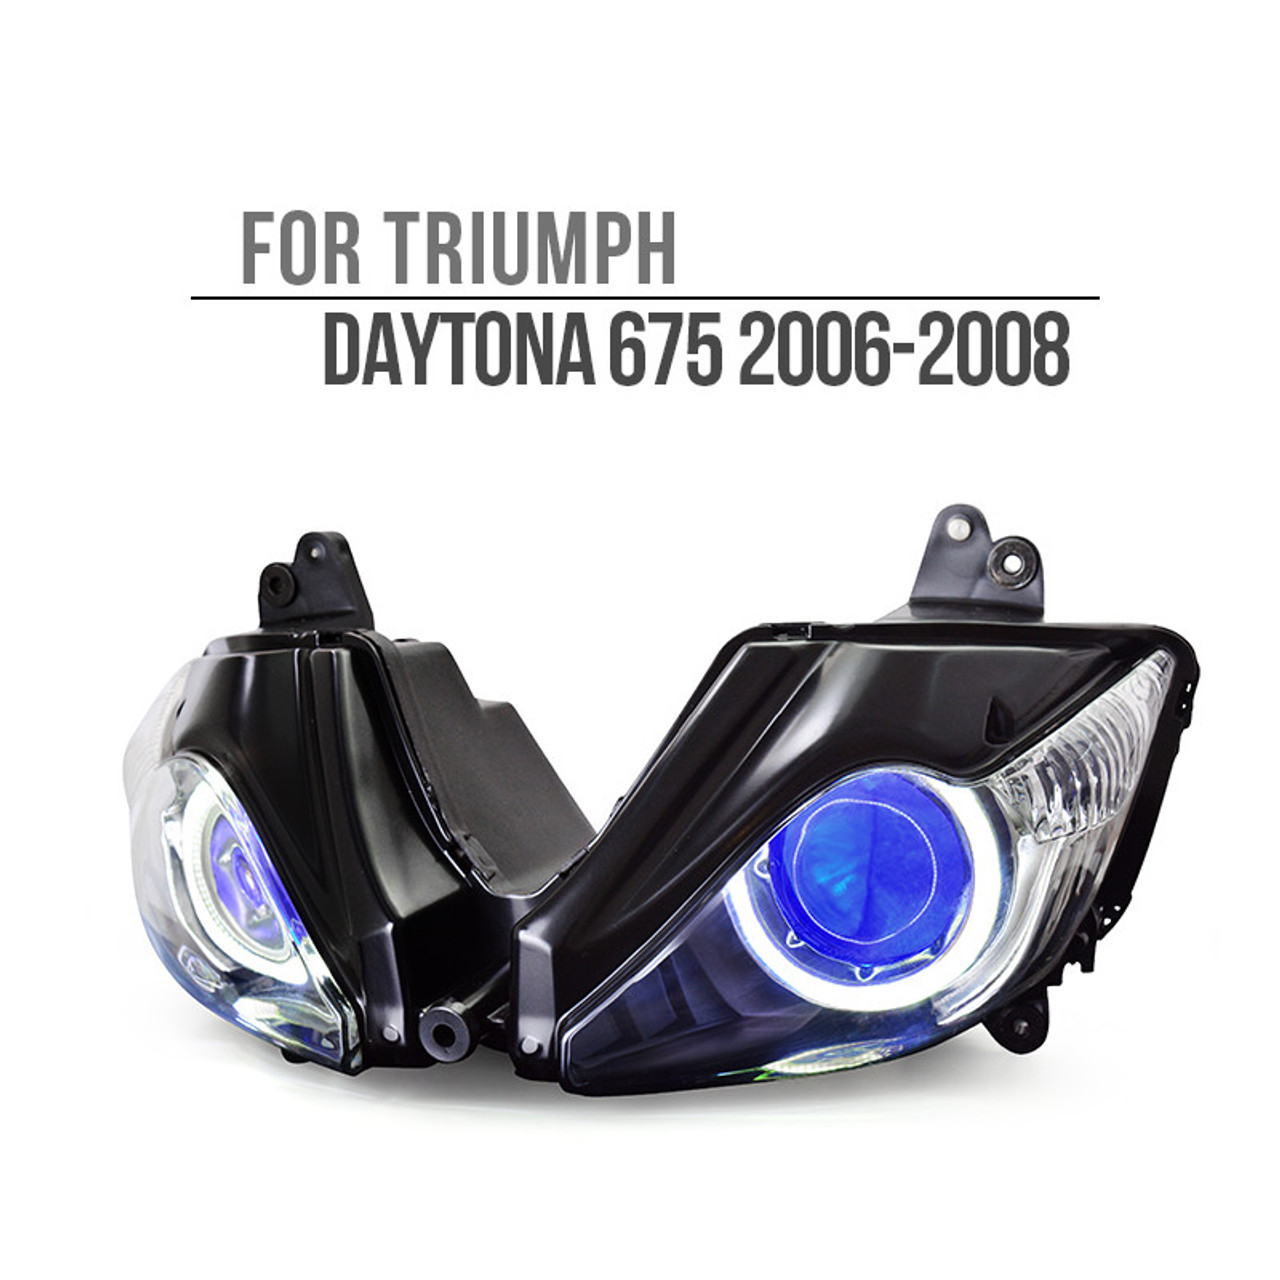 Fit for Triumph Daytona 675 2006-2008 LED Angel Eye Headlight Assembly